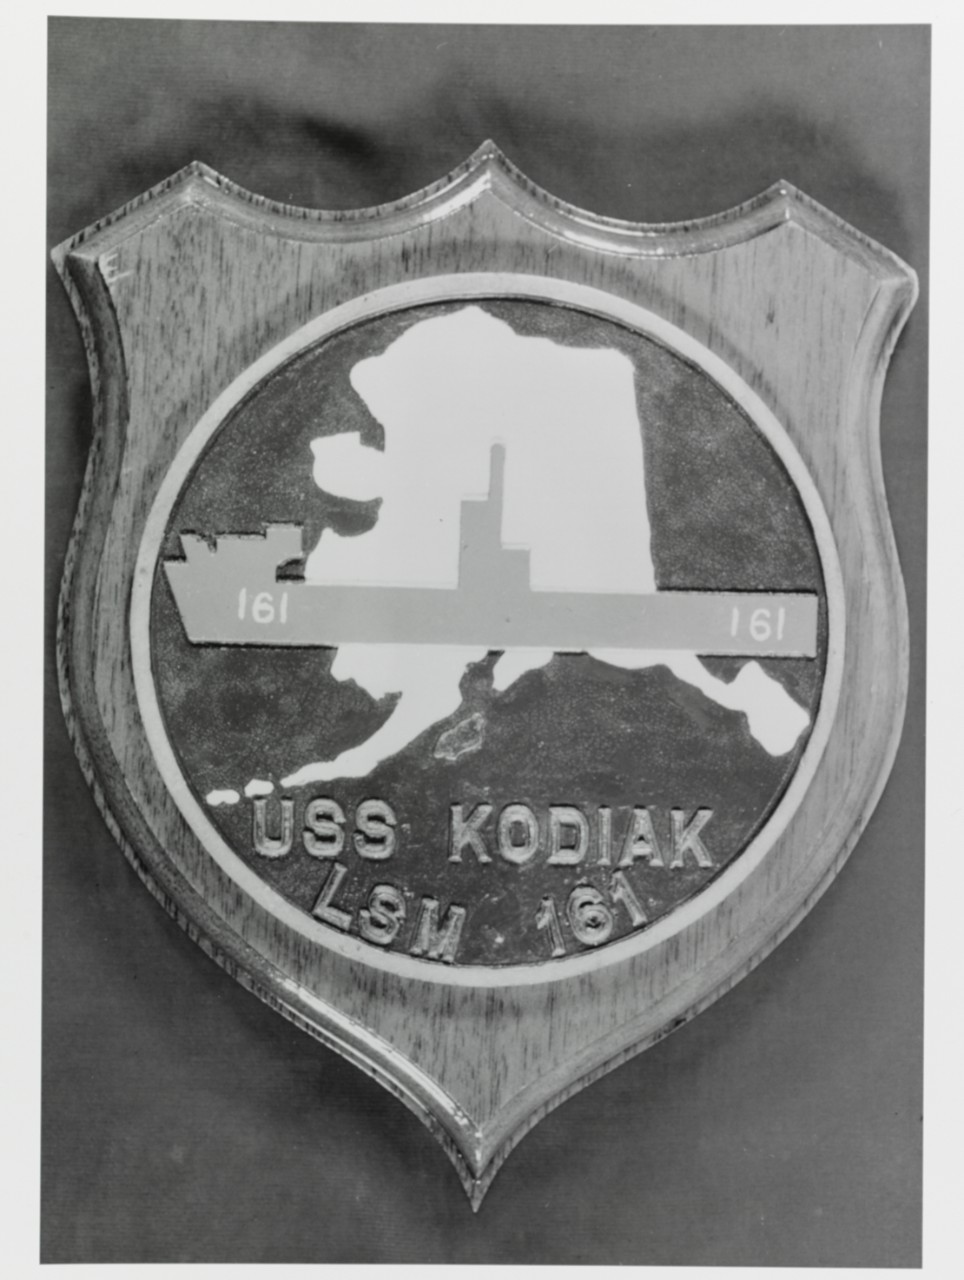 Insignia: USS KODIAK (LSM-161)